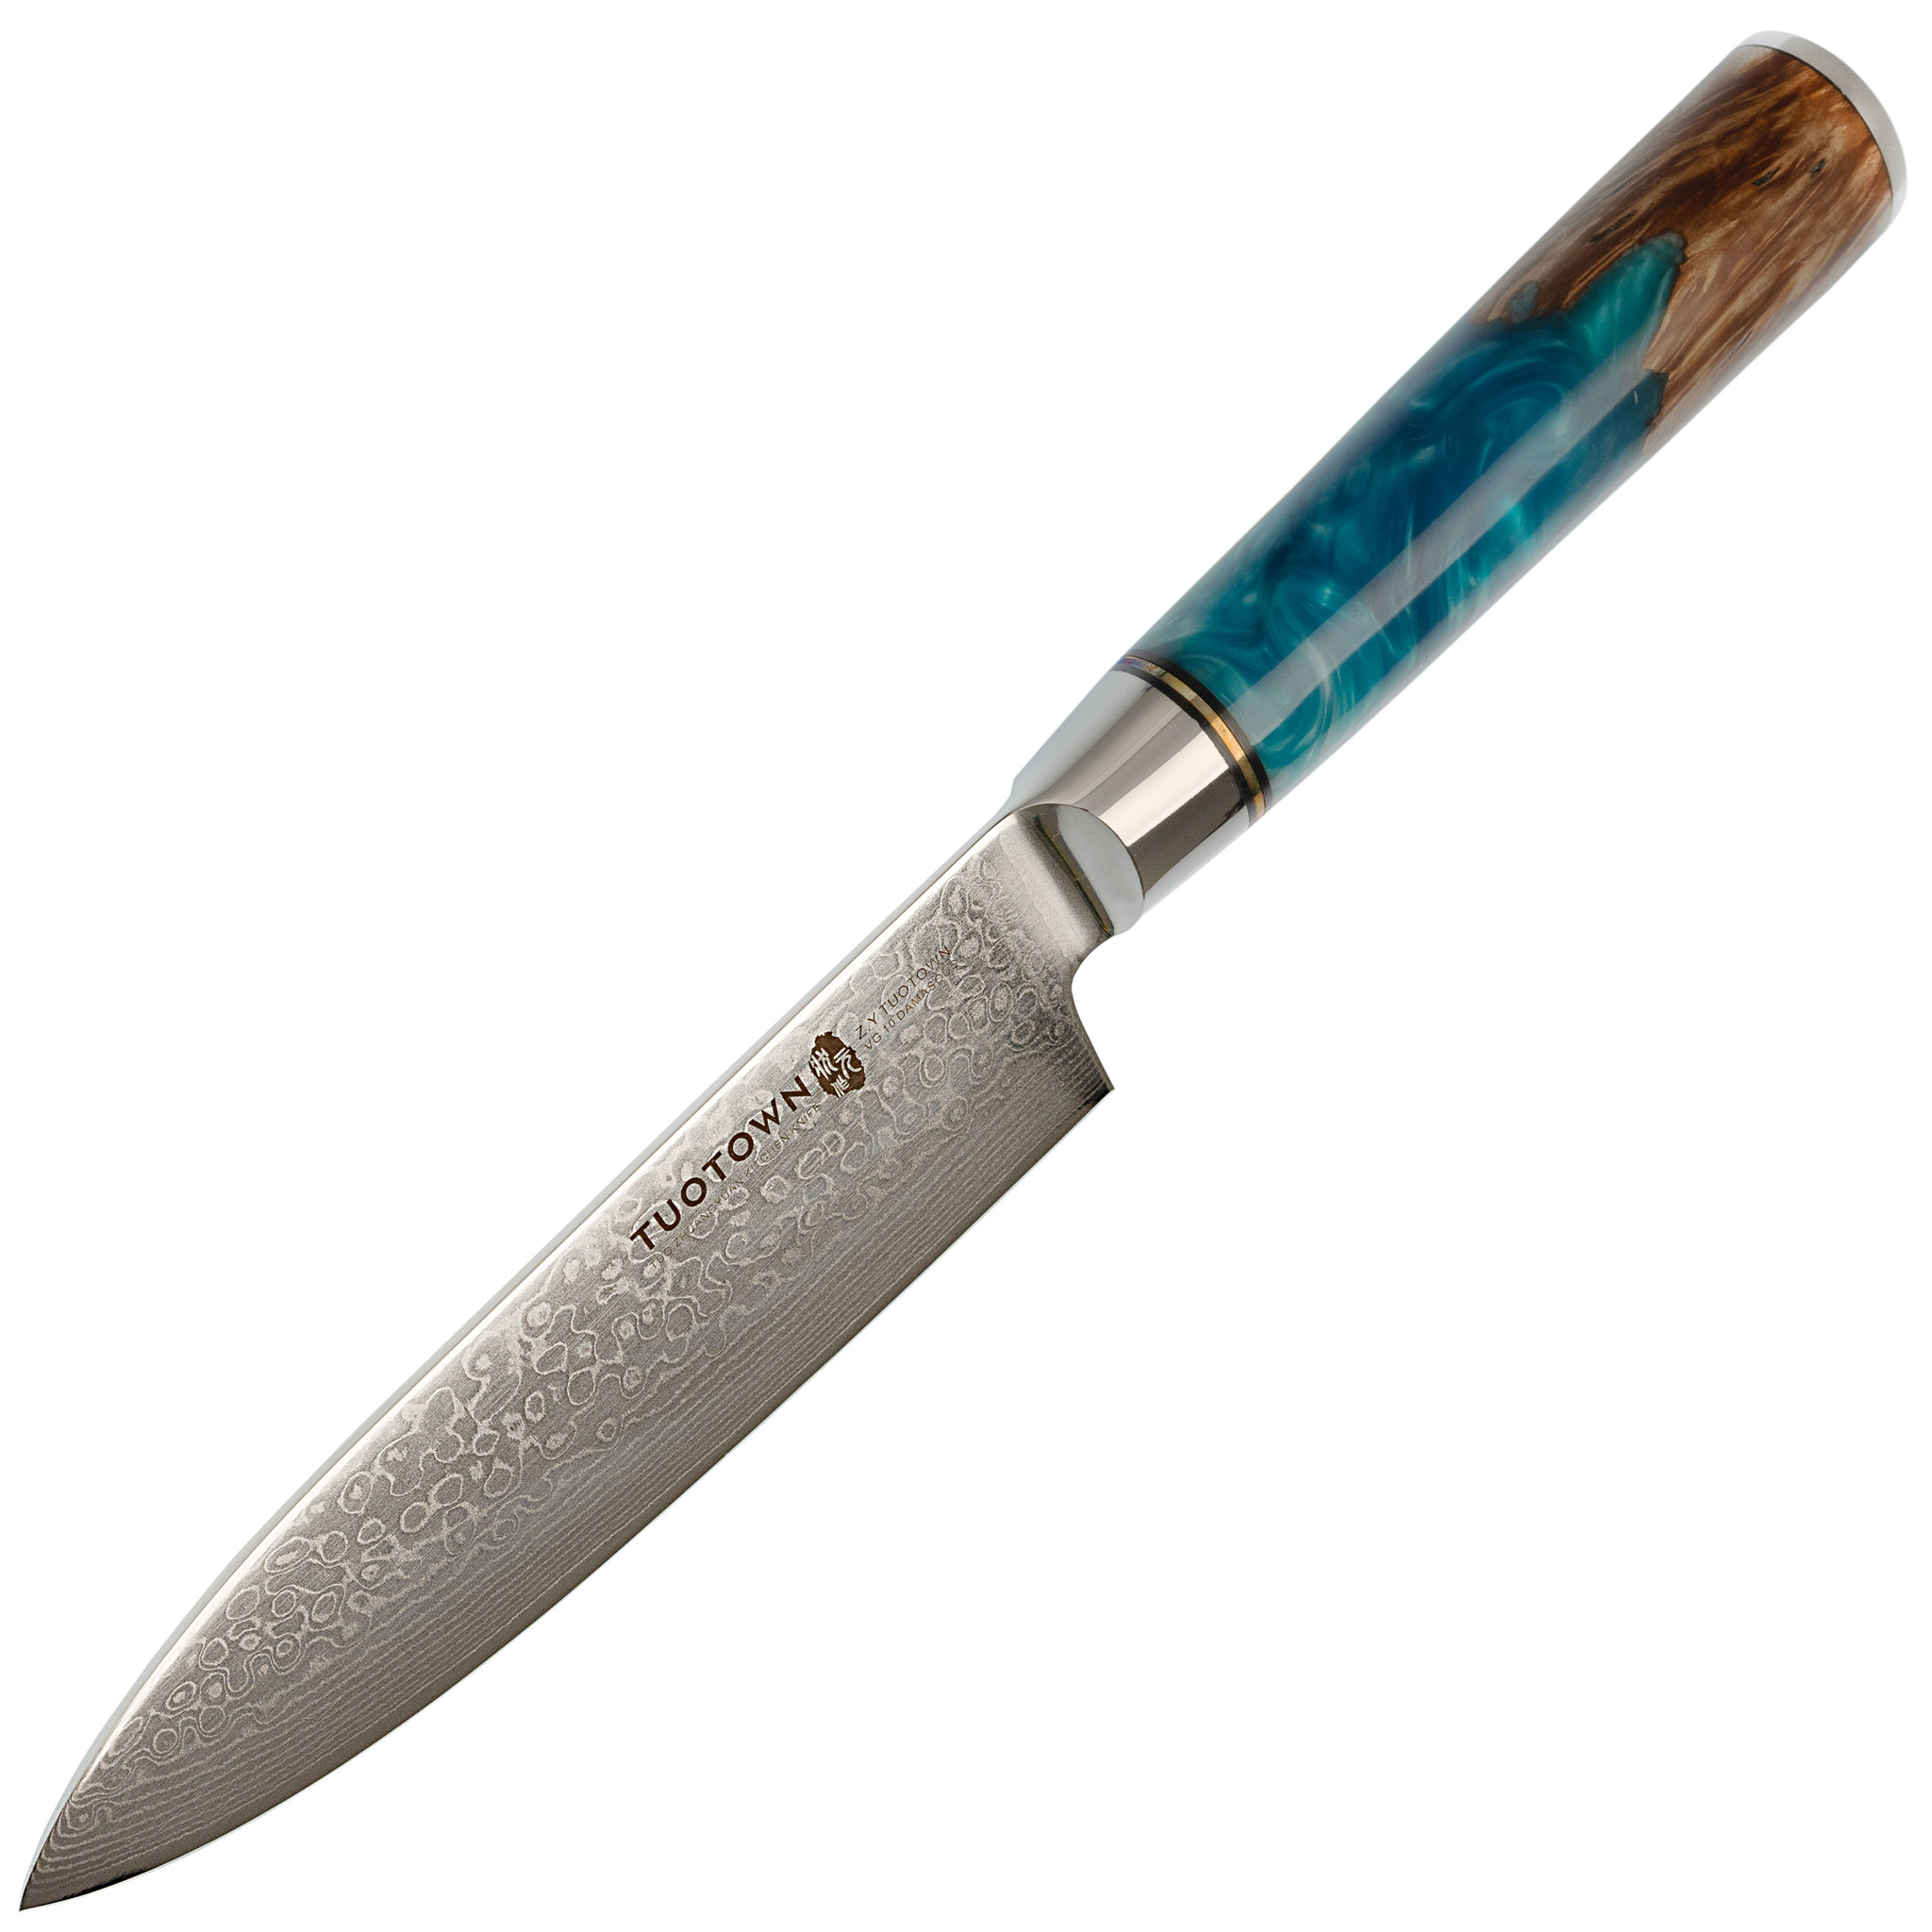 Нож кухонный Tuotown DM003, сталь VG-10, рукоять дерево/эпоксидка - фото 2